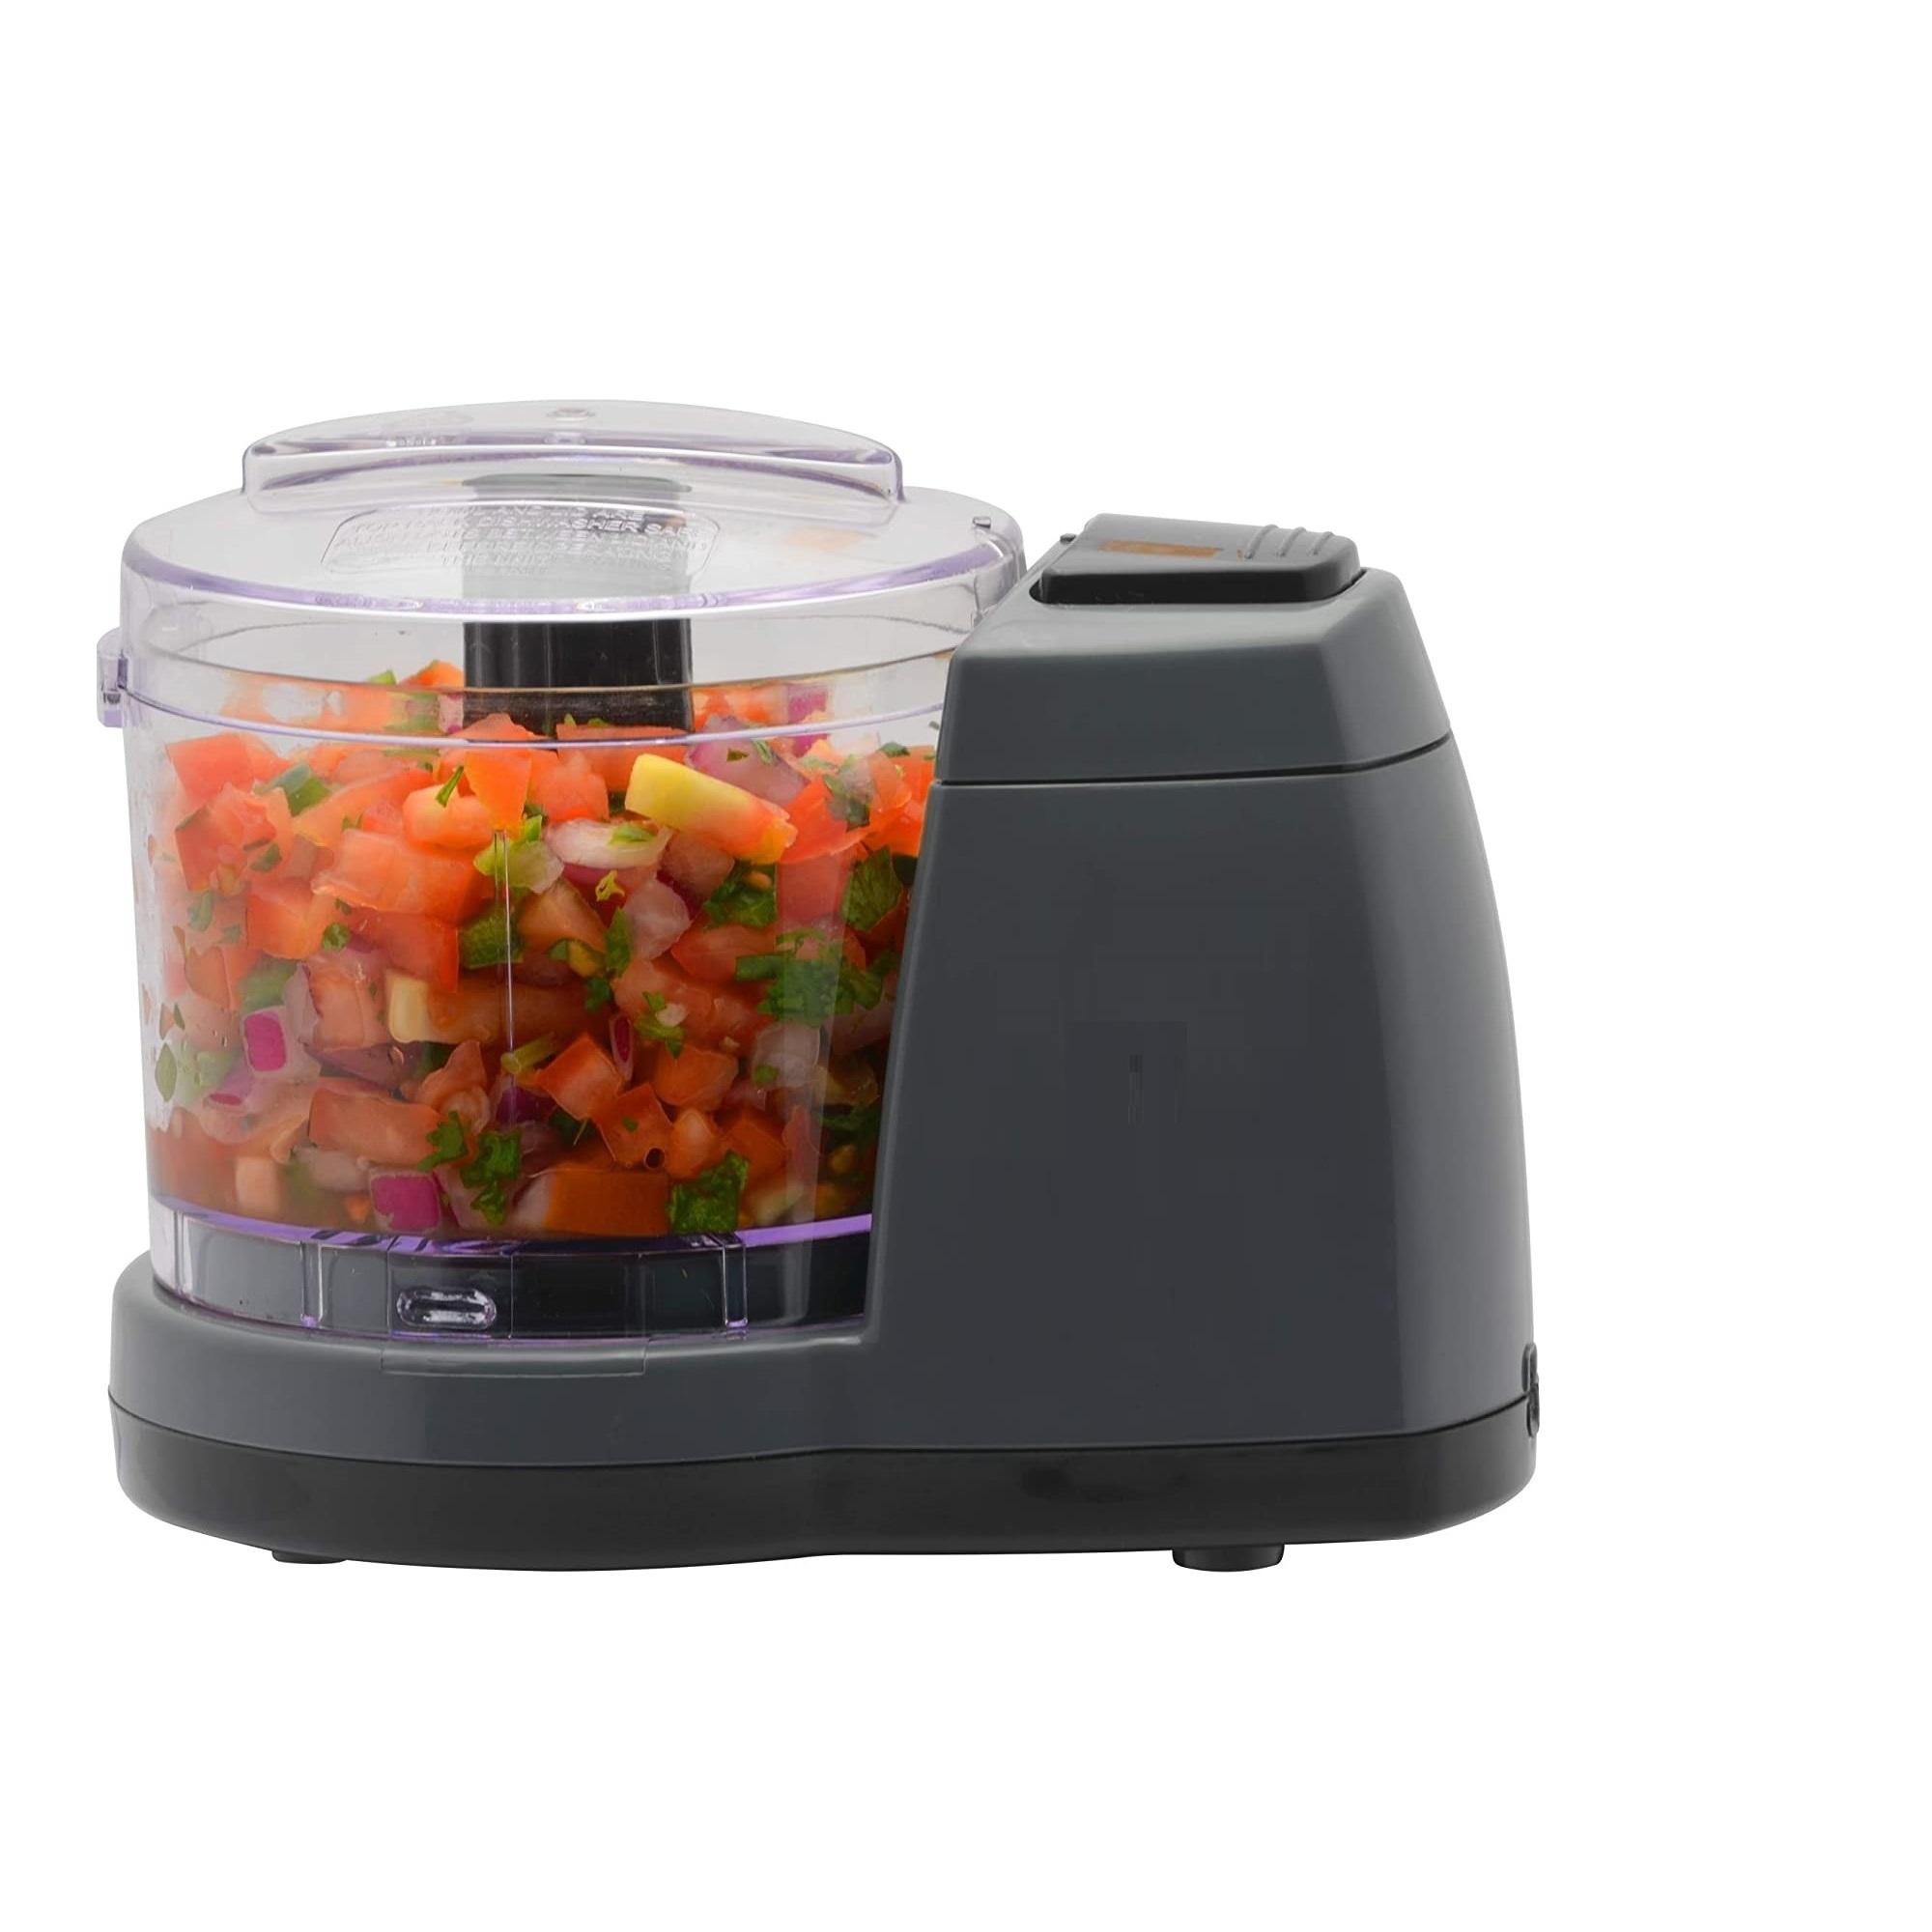 A MIJIA Home 2 Cups Electric Vegetable Chopper & Mini Food Processor,kitchen Accessories